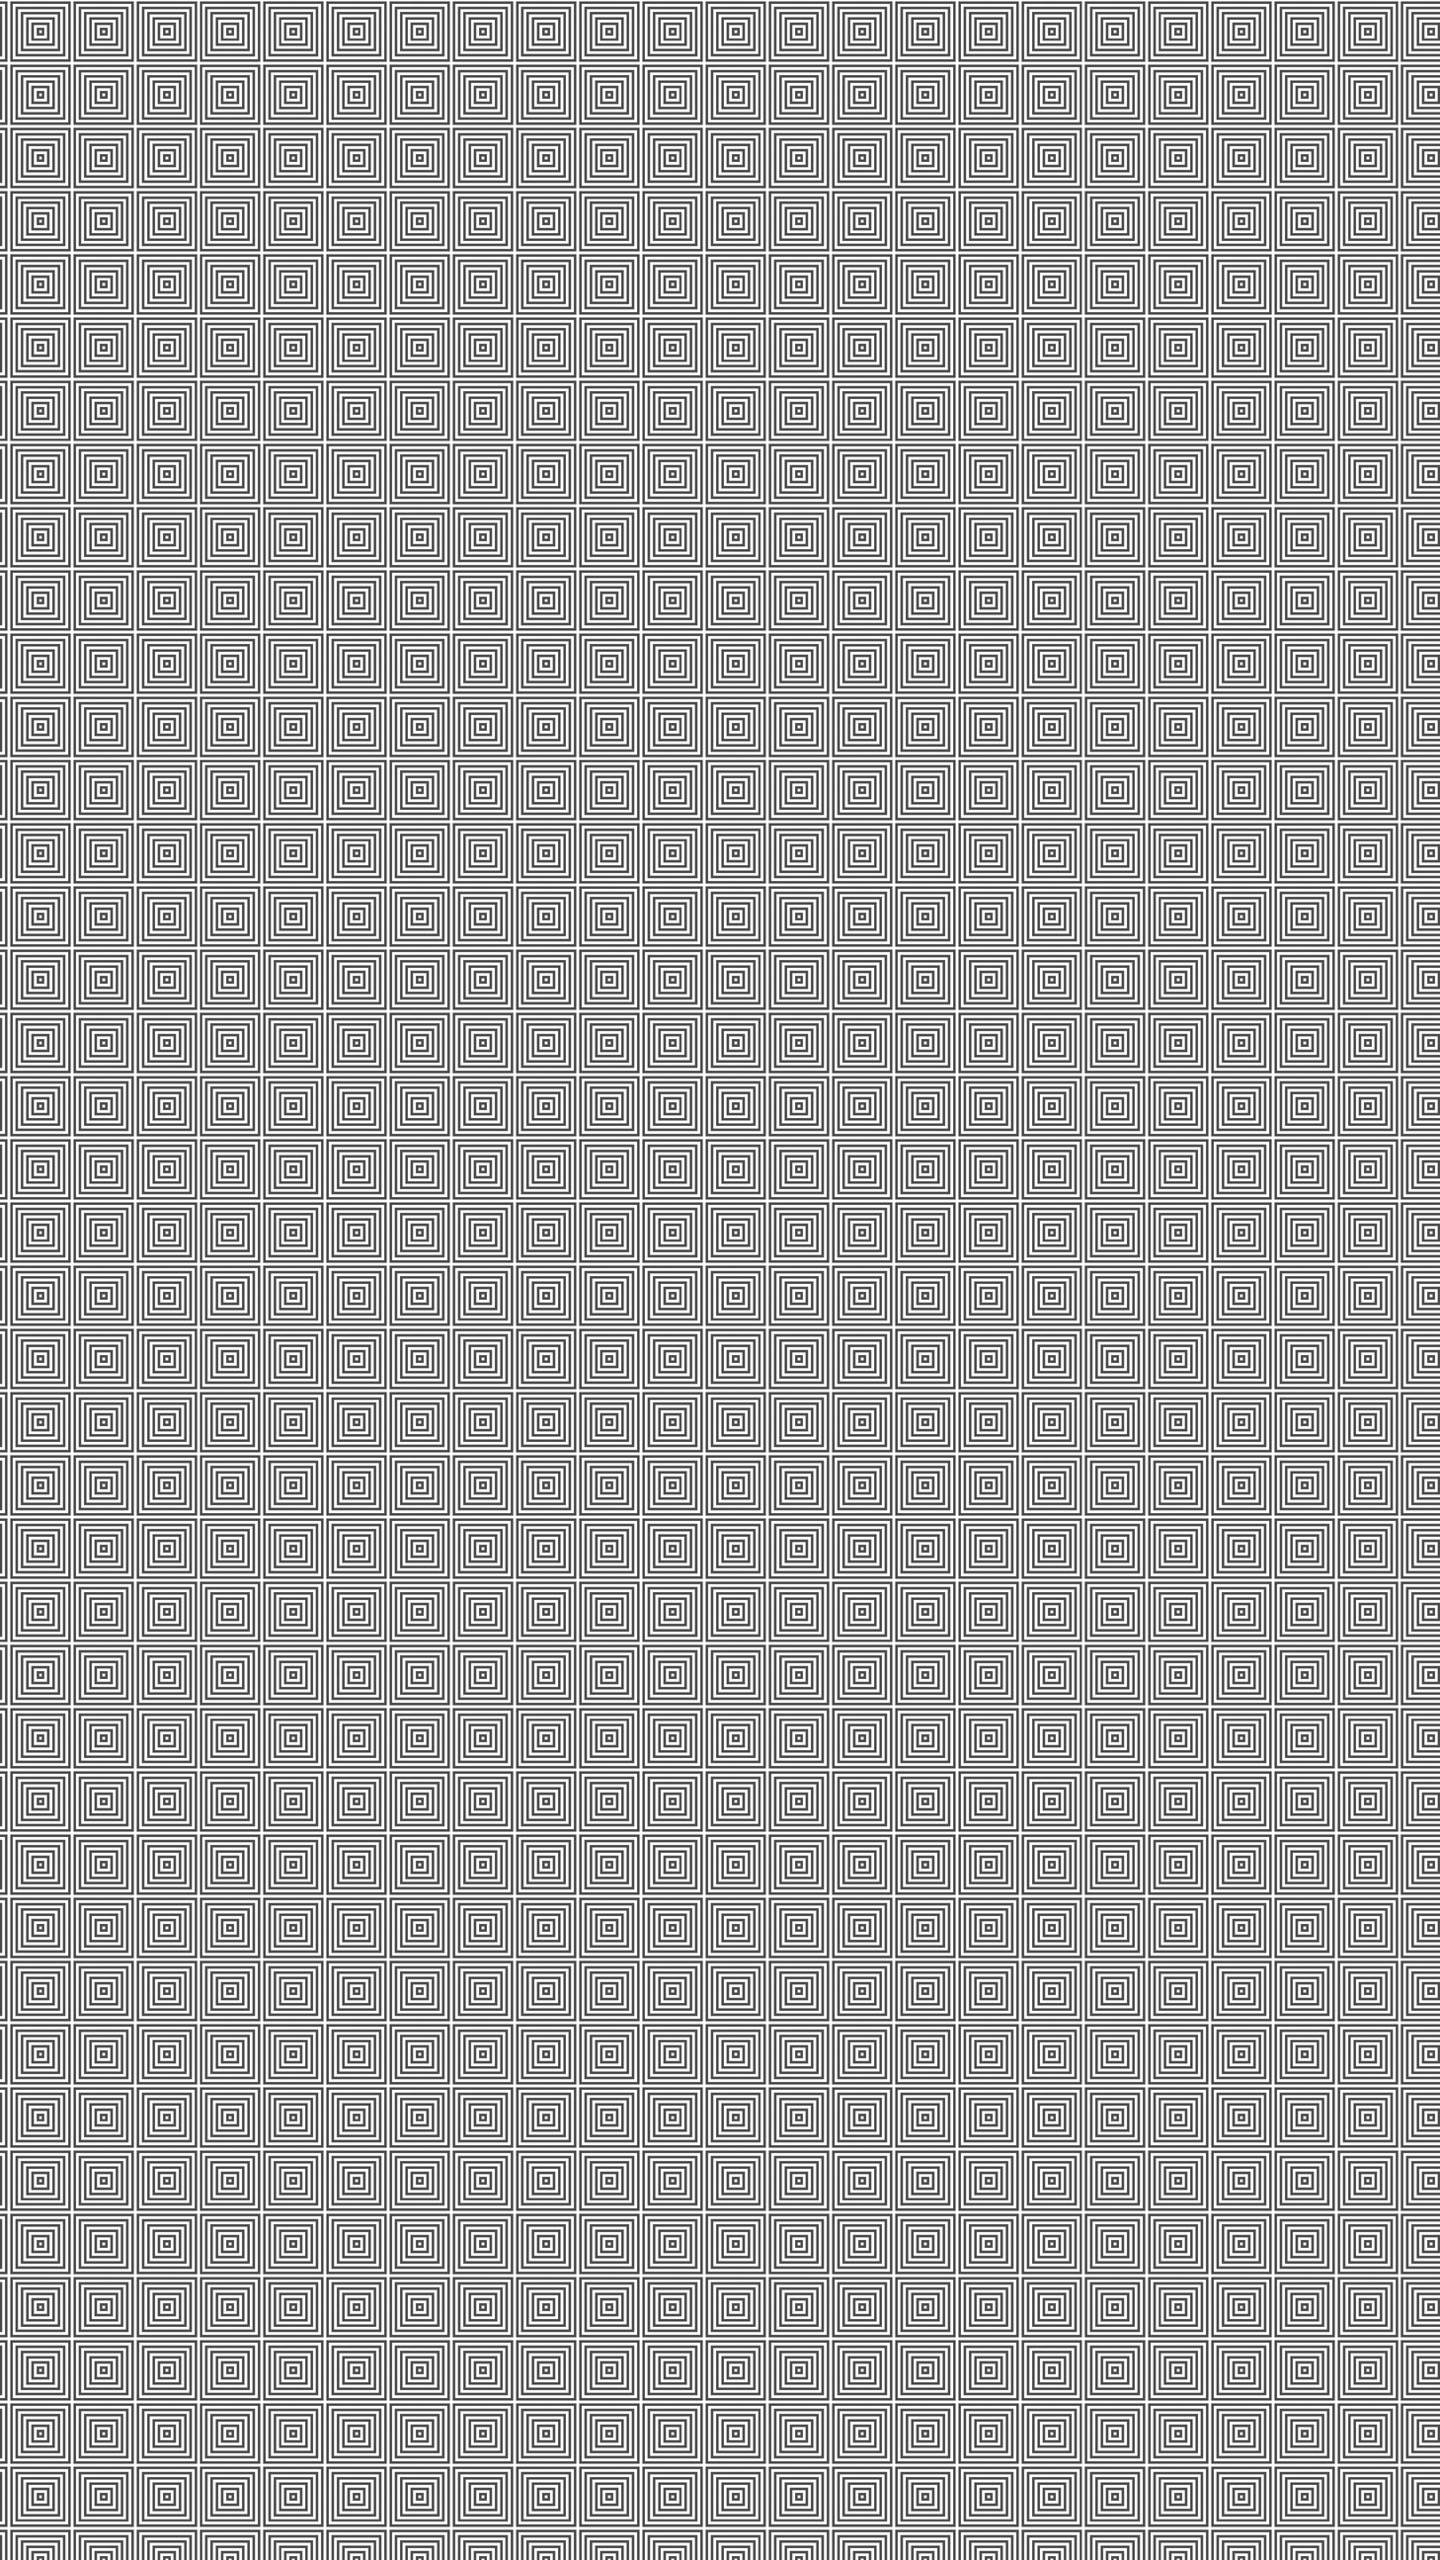 Pattern Square Black And White. Wallpaper.sc SmartPhone